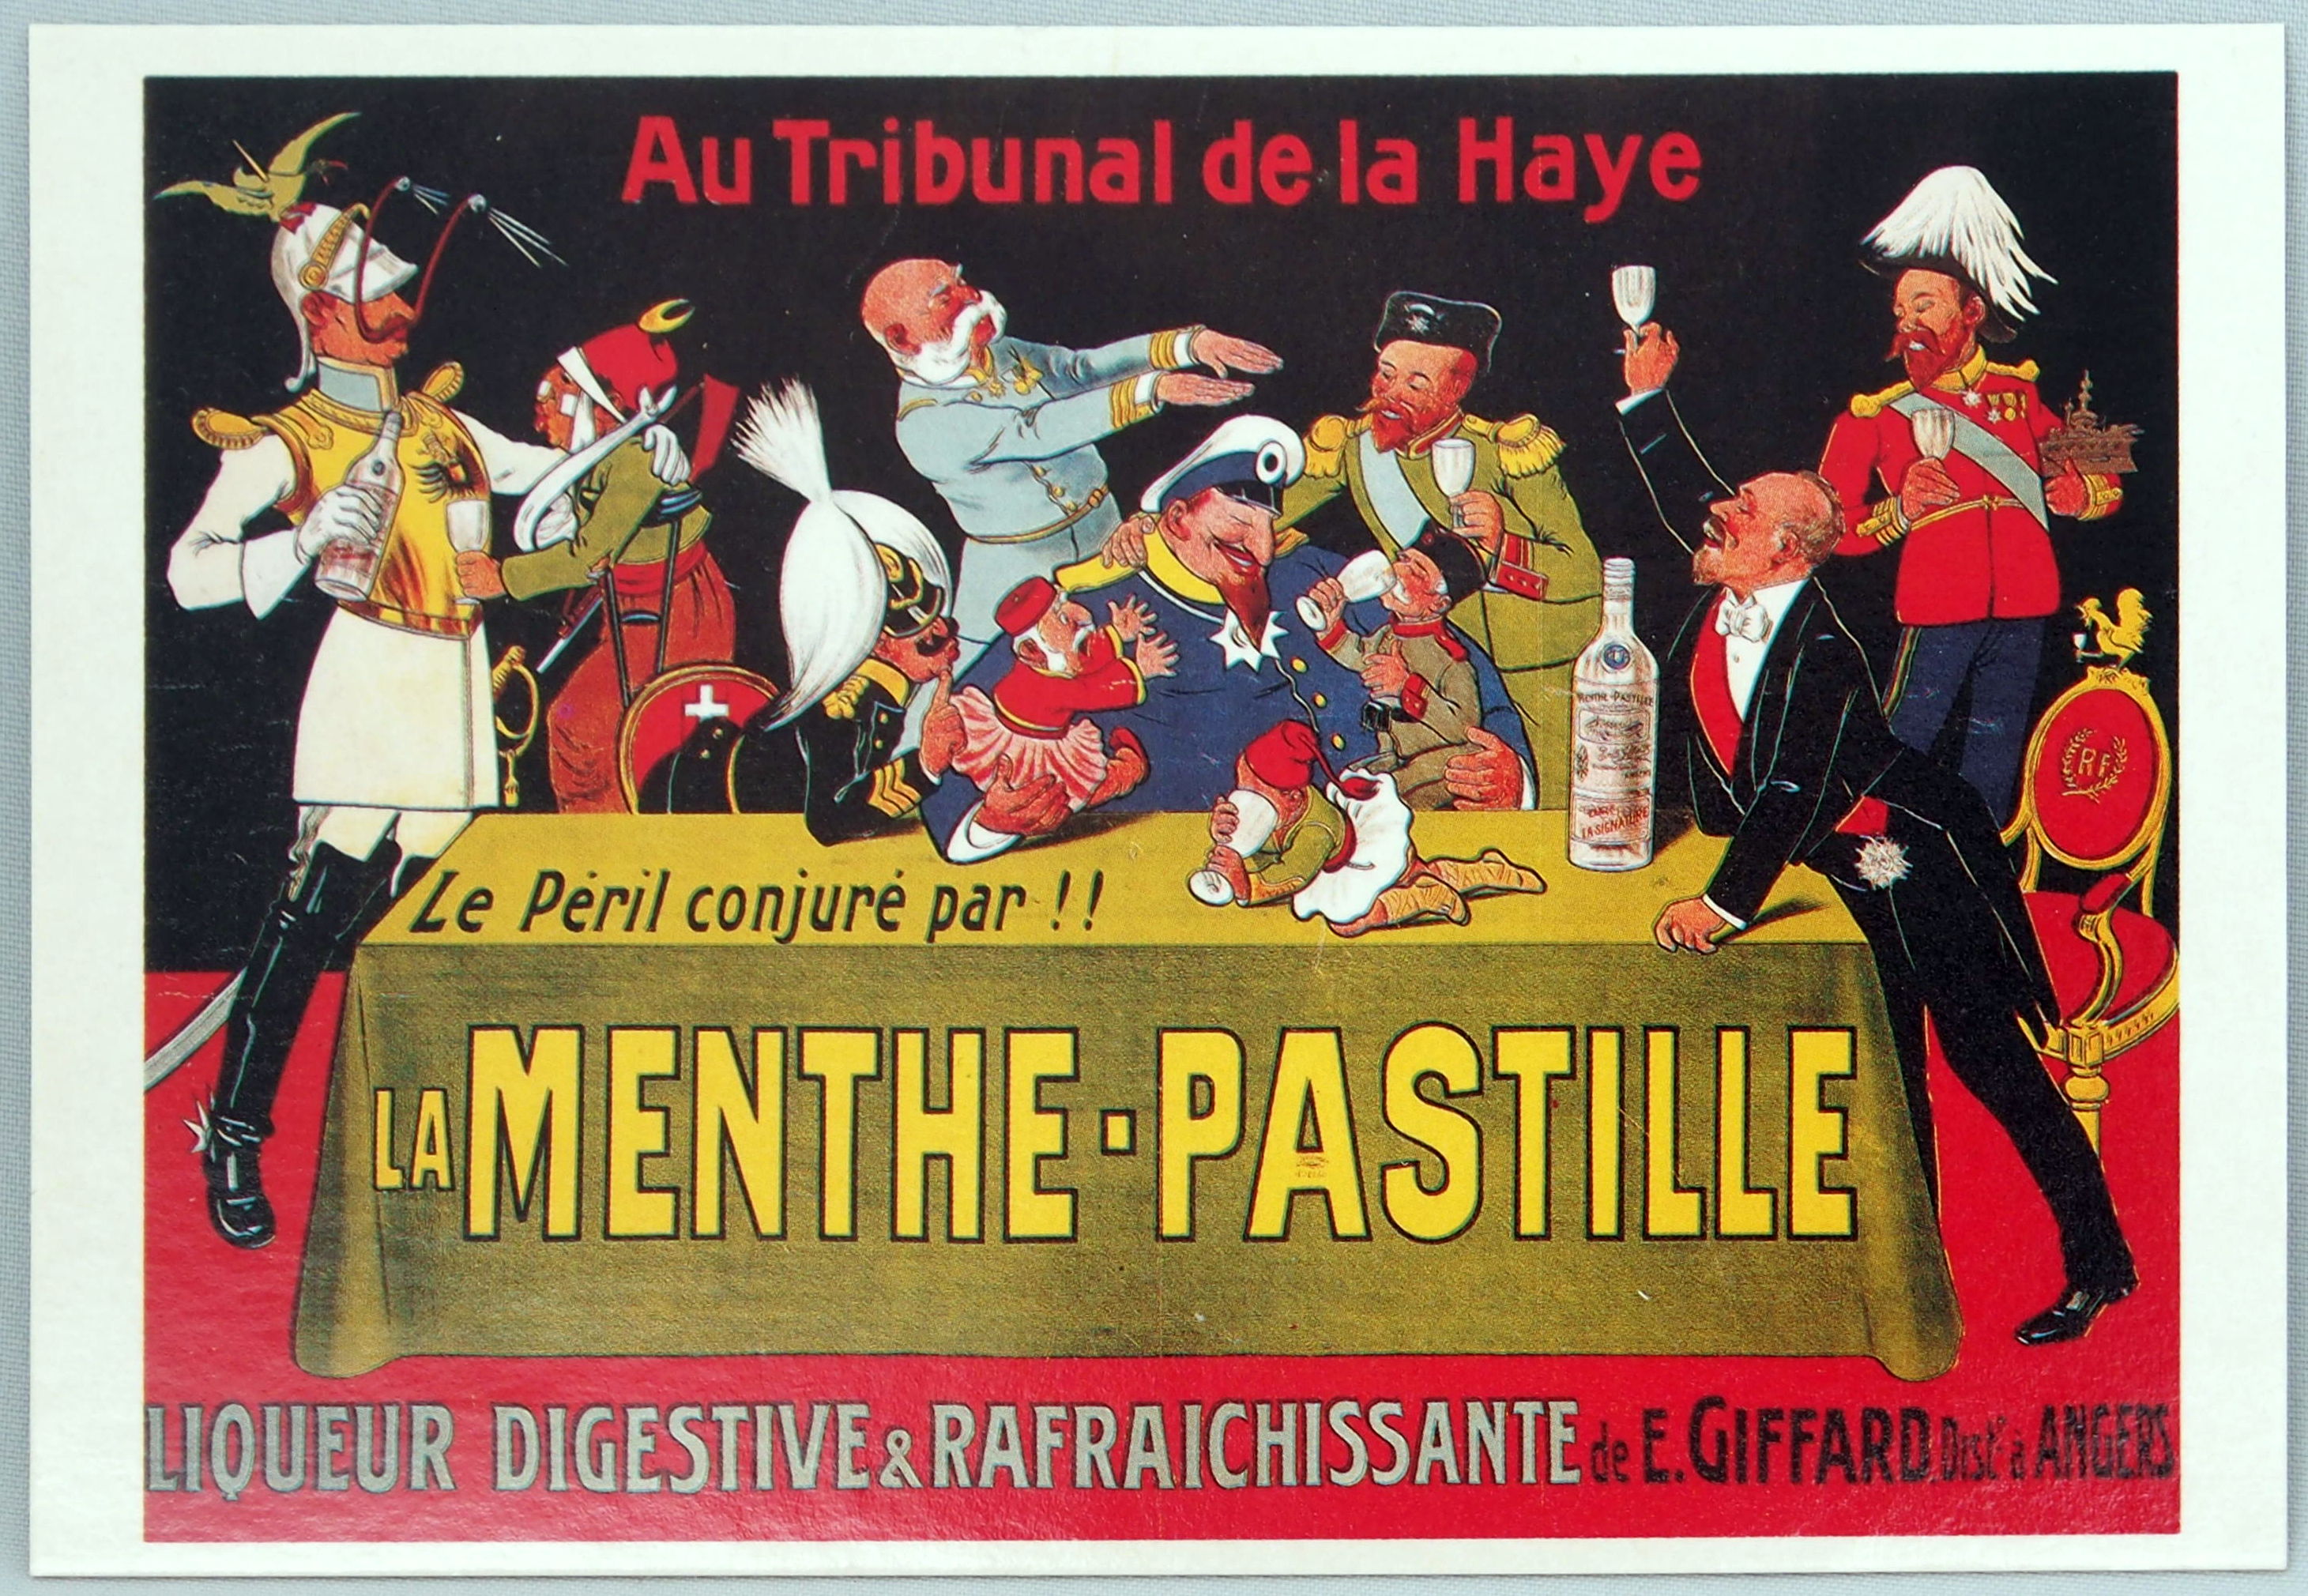 History of Giffard Menthe-Pastille